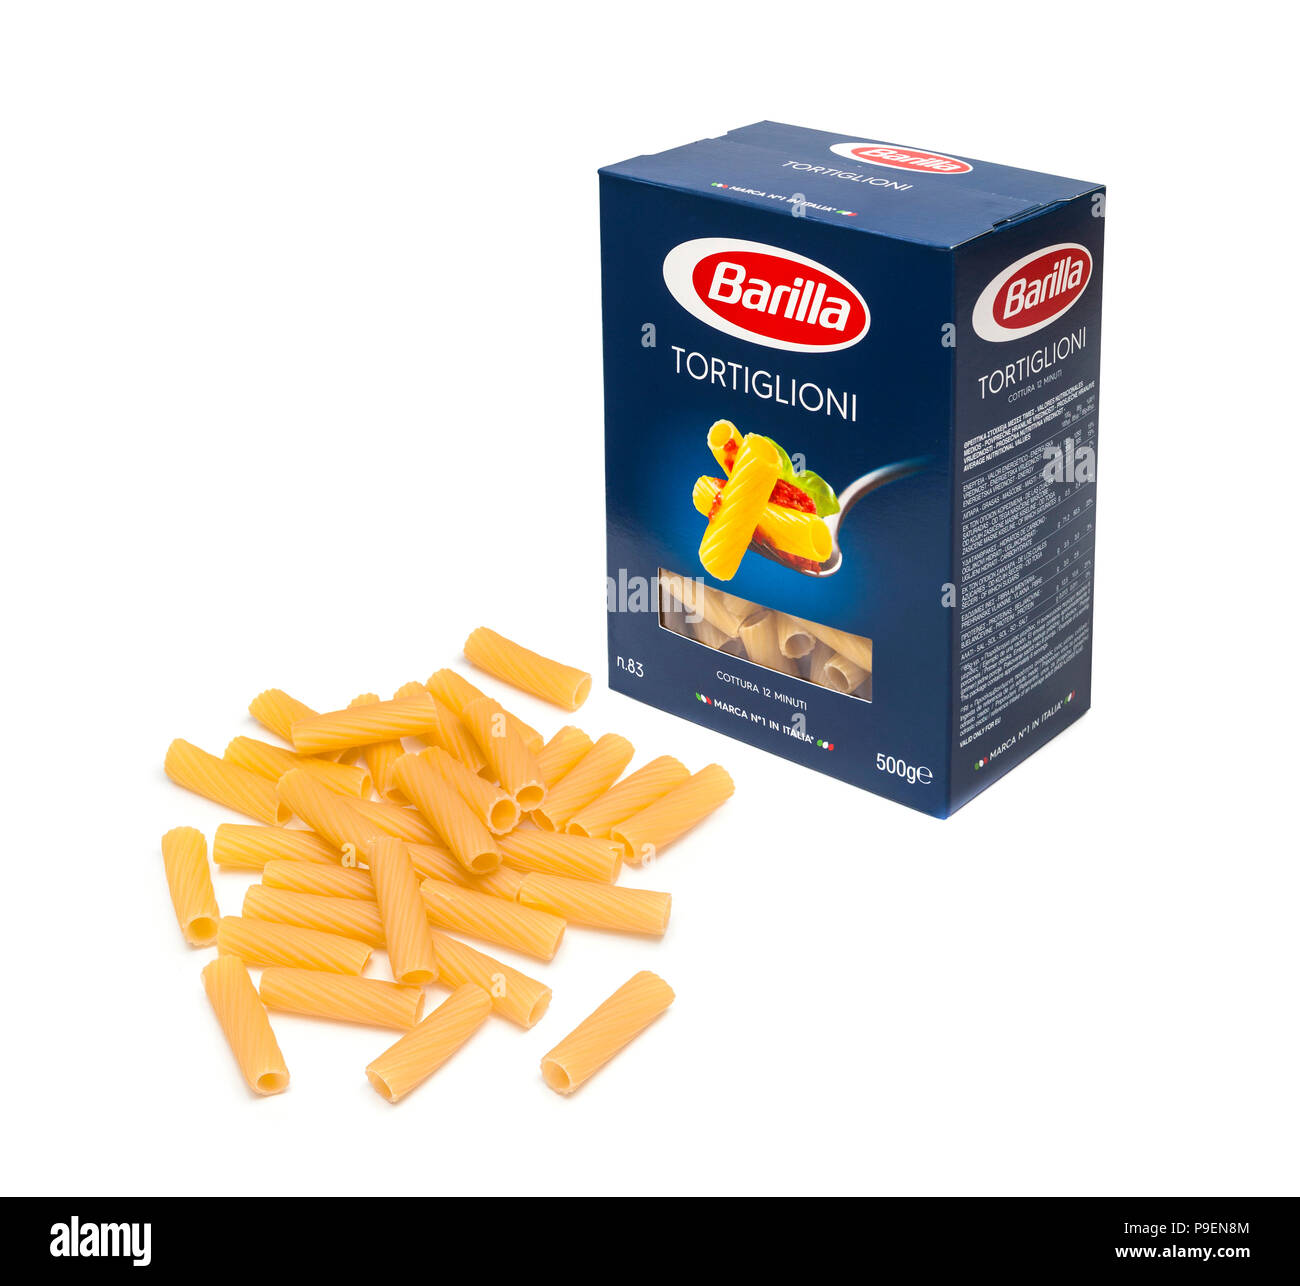 https://c8.alamy.com/comp/P9EN8M/barilla-tortiglioni-italian-pasta-in-a-box-P9EN8M.jpg